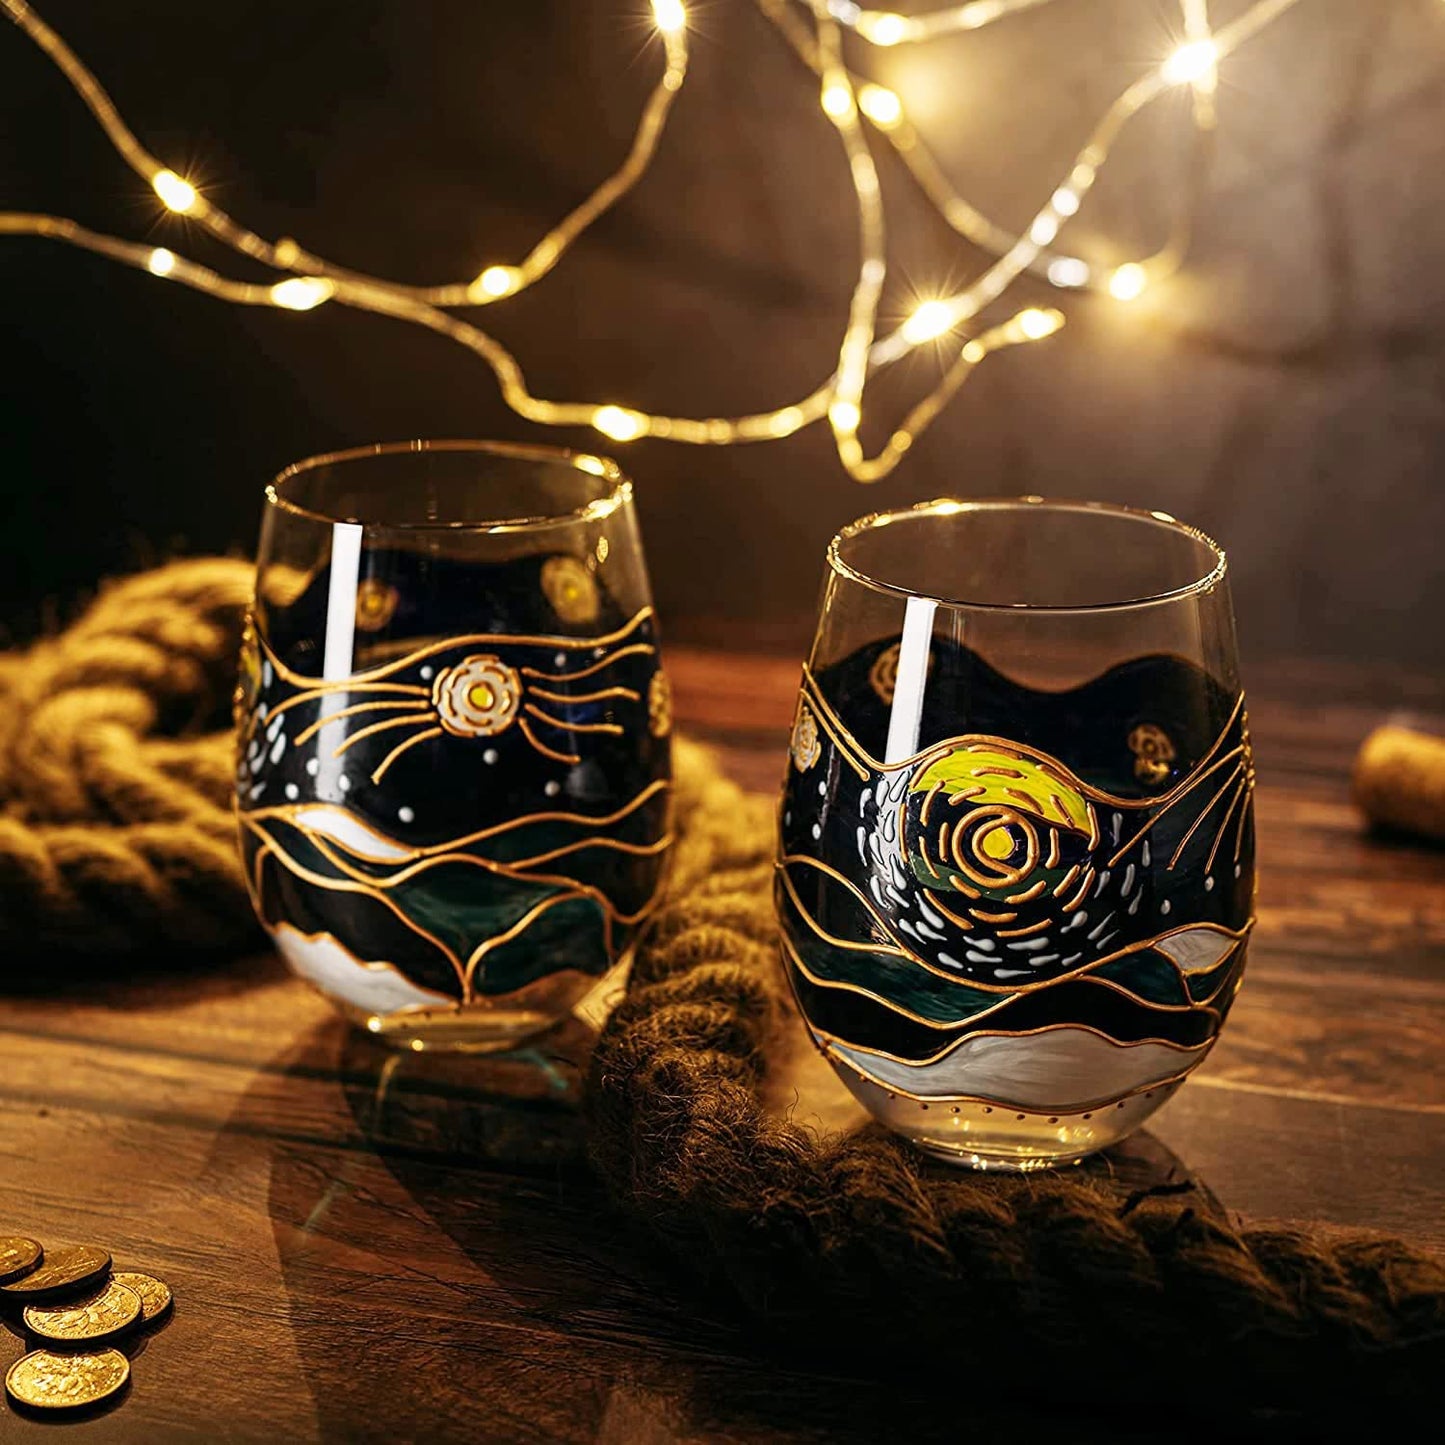 The Wine Savant - Artisanal Hand-Painted Stemless Van Gogh Wine Glasses - Set of 2 - 18oz